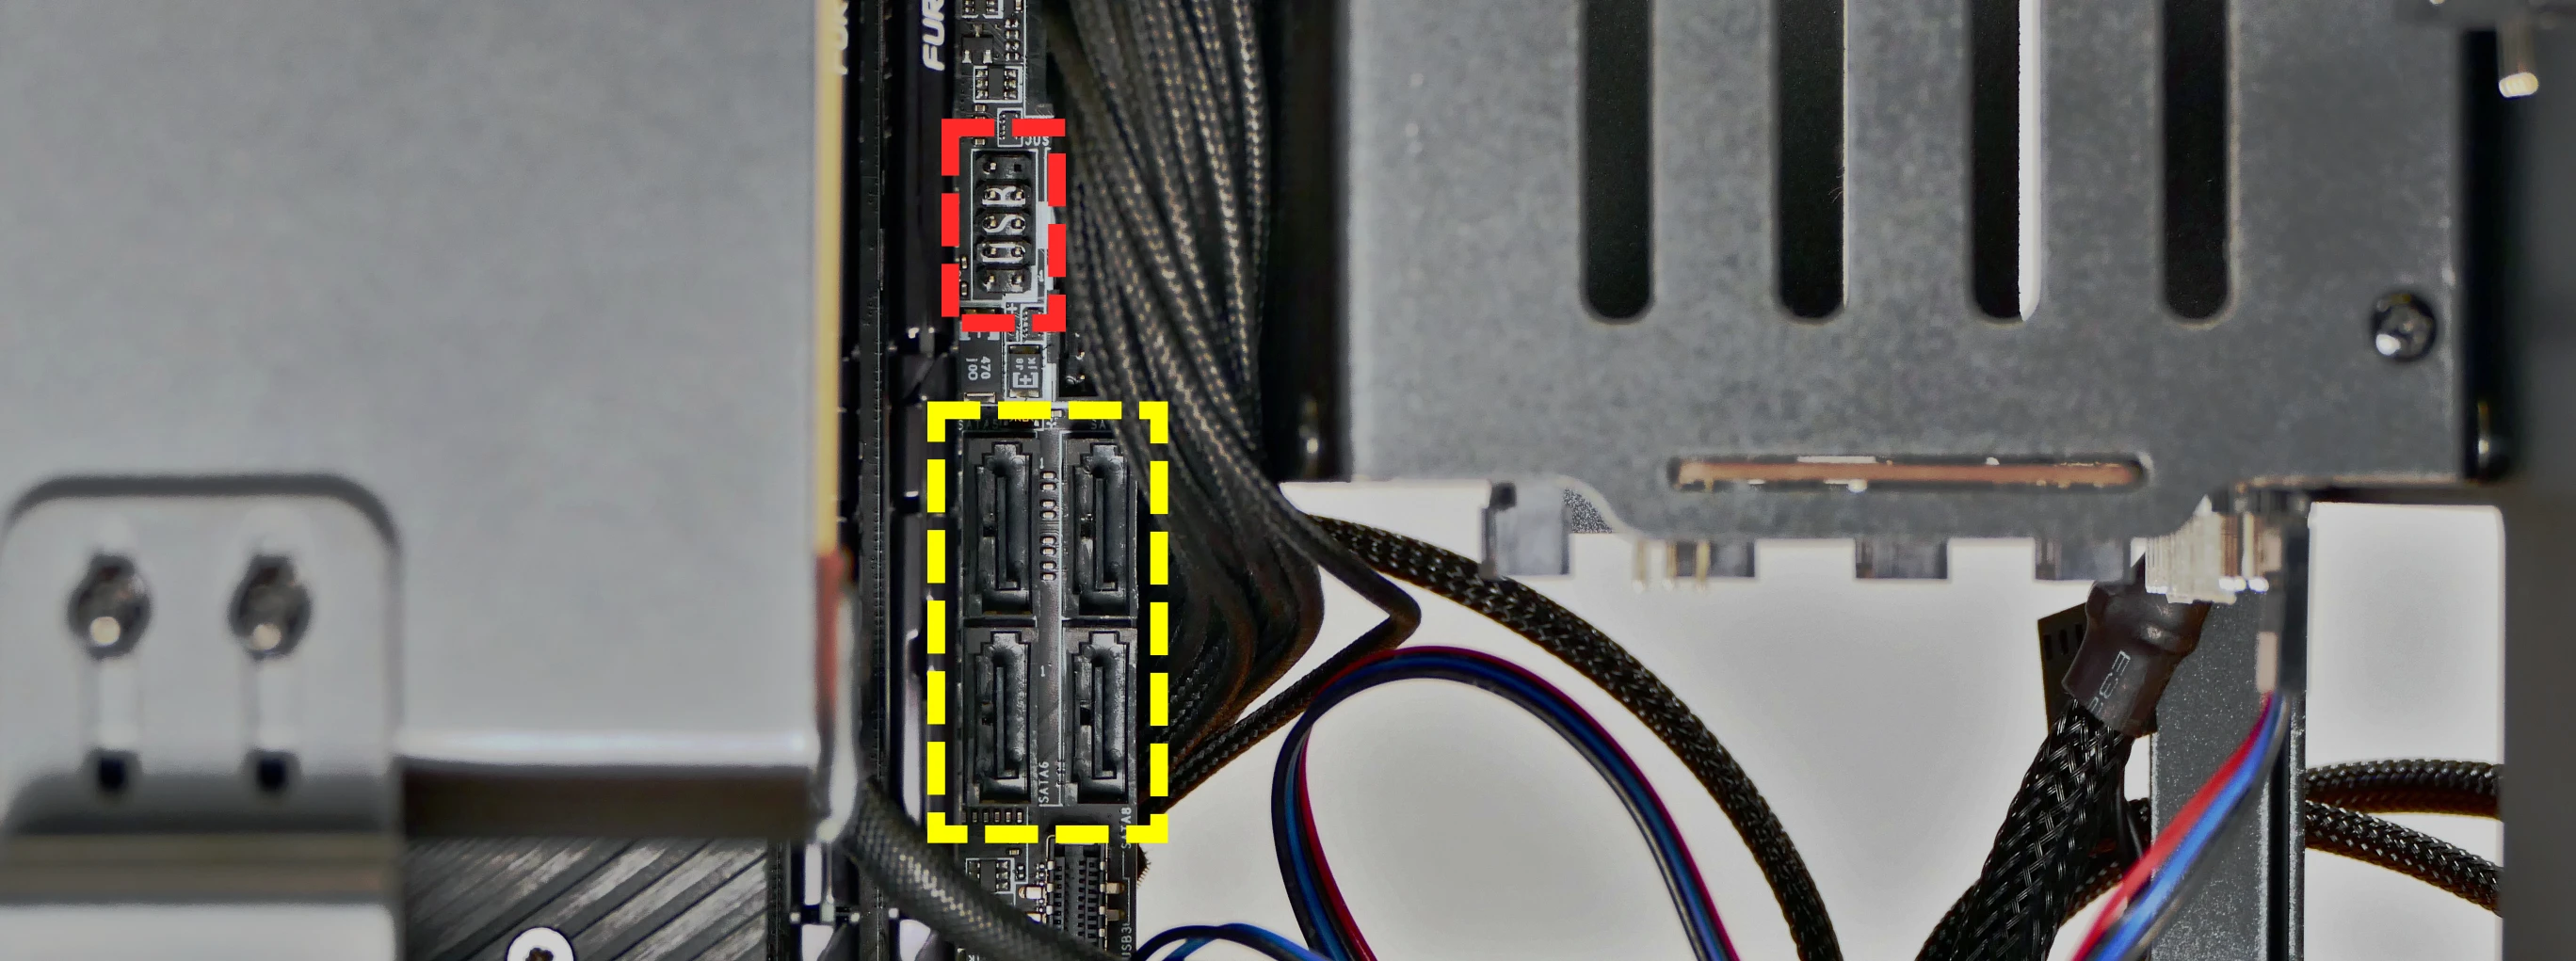 SATA connectors on motherboard